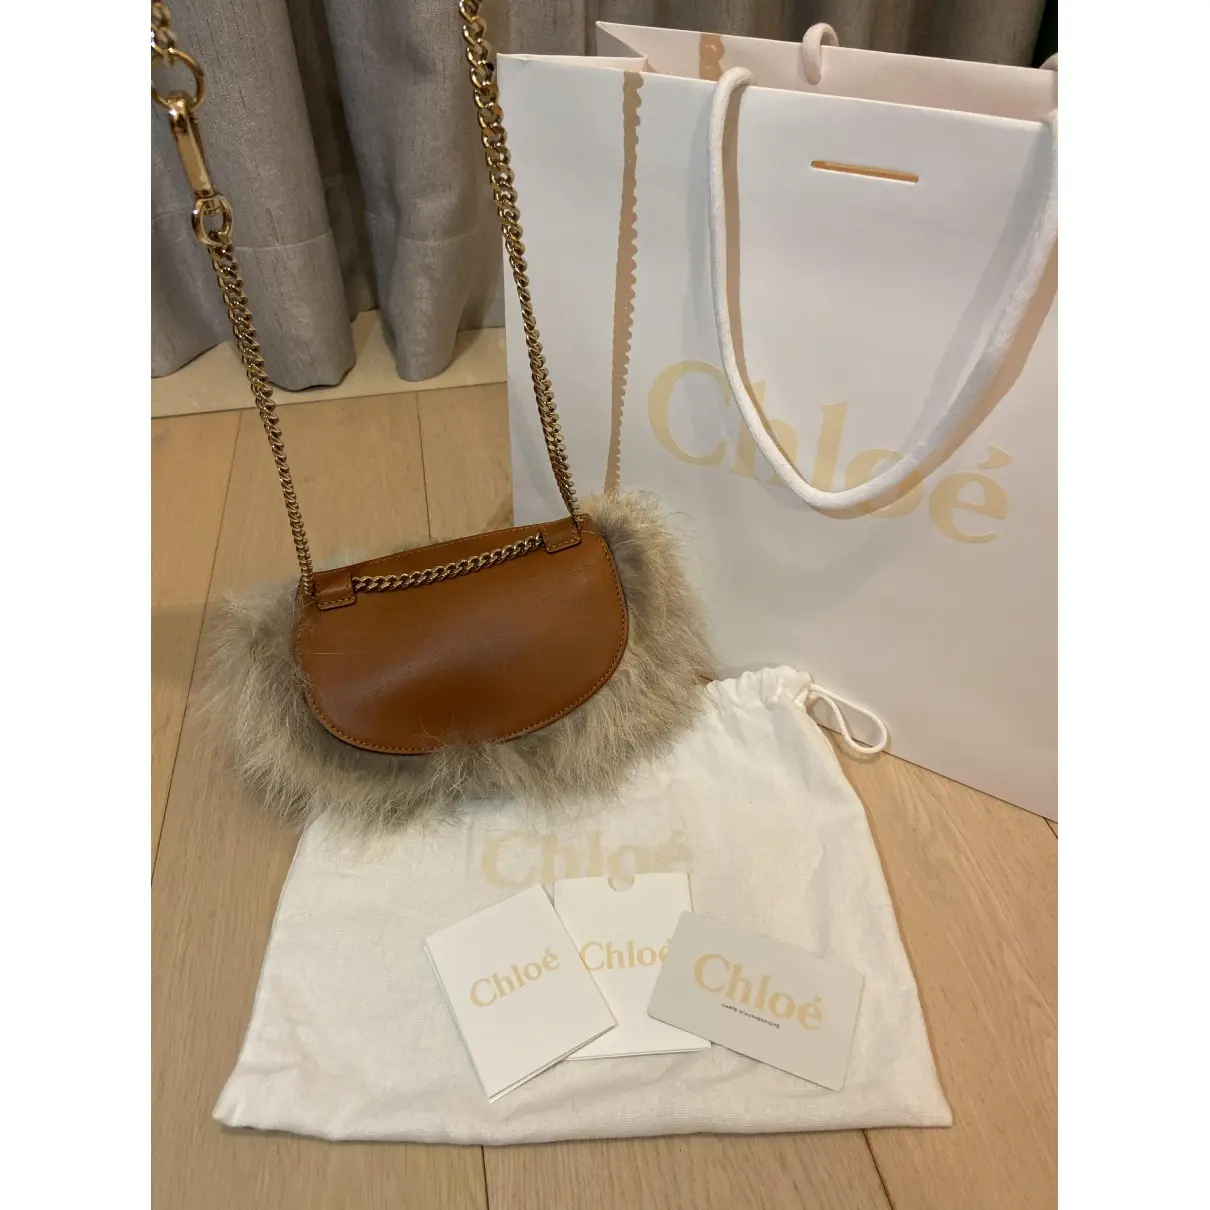 Buy Chloé Georgia faux fur handbag online